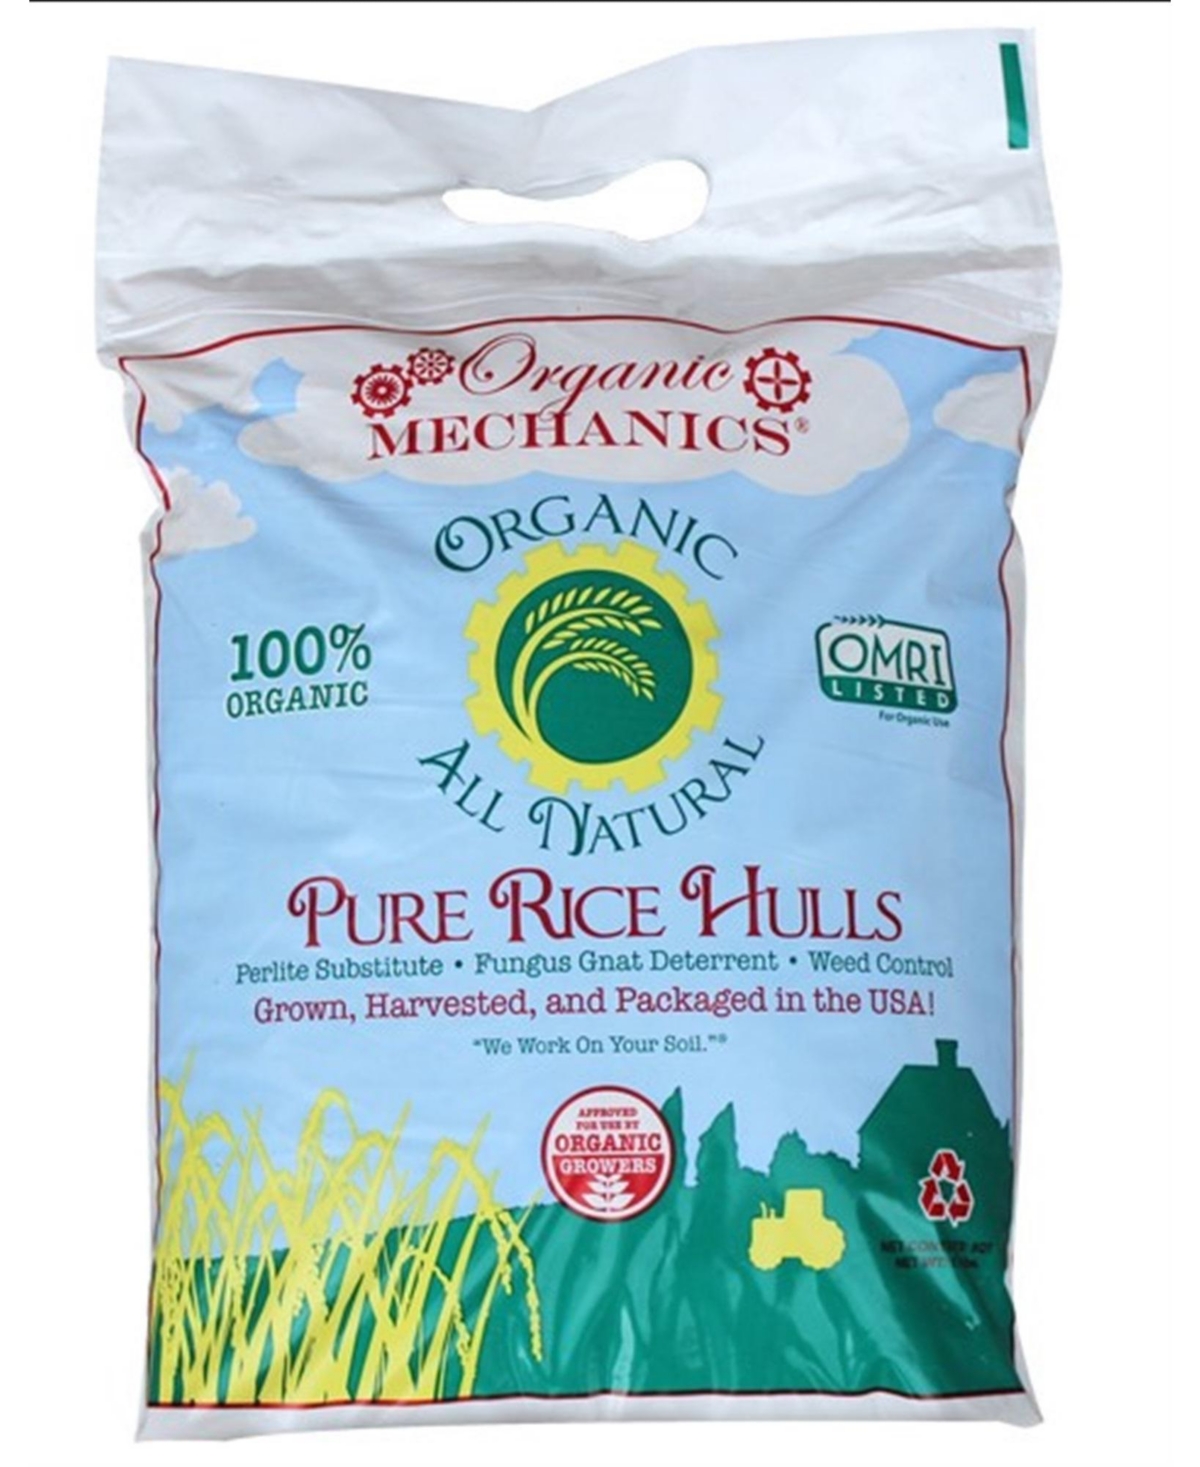 Organic Mechanics, Pure Rice Hulls Perlite Substitute Soil Amendment, Potting Soil, 8 Quart Bag - Open Misce